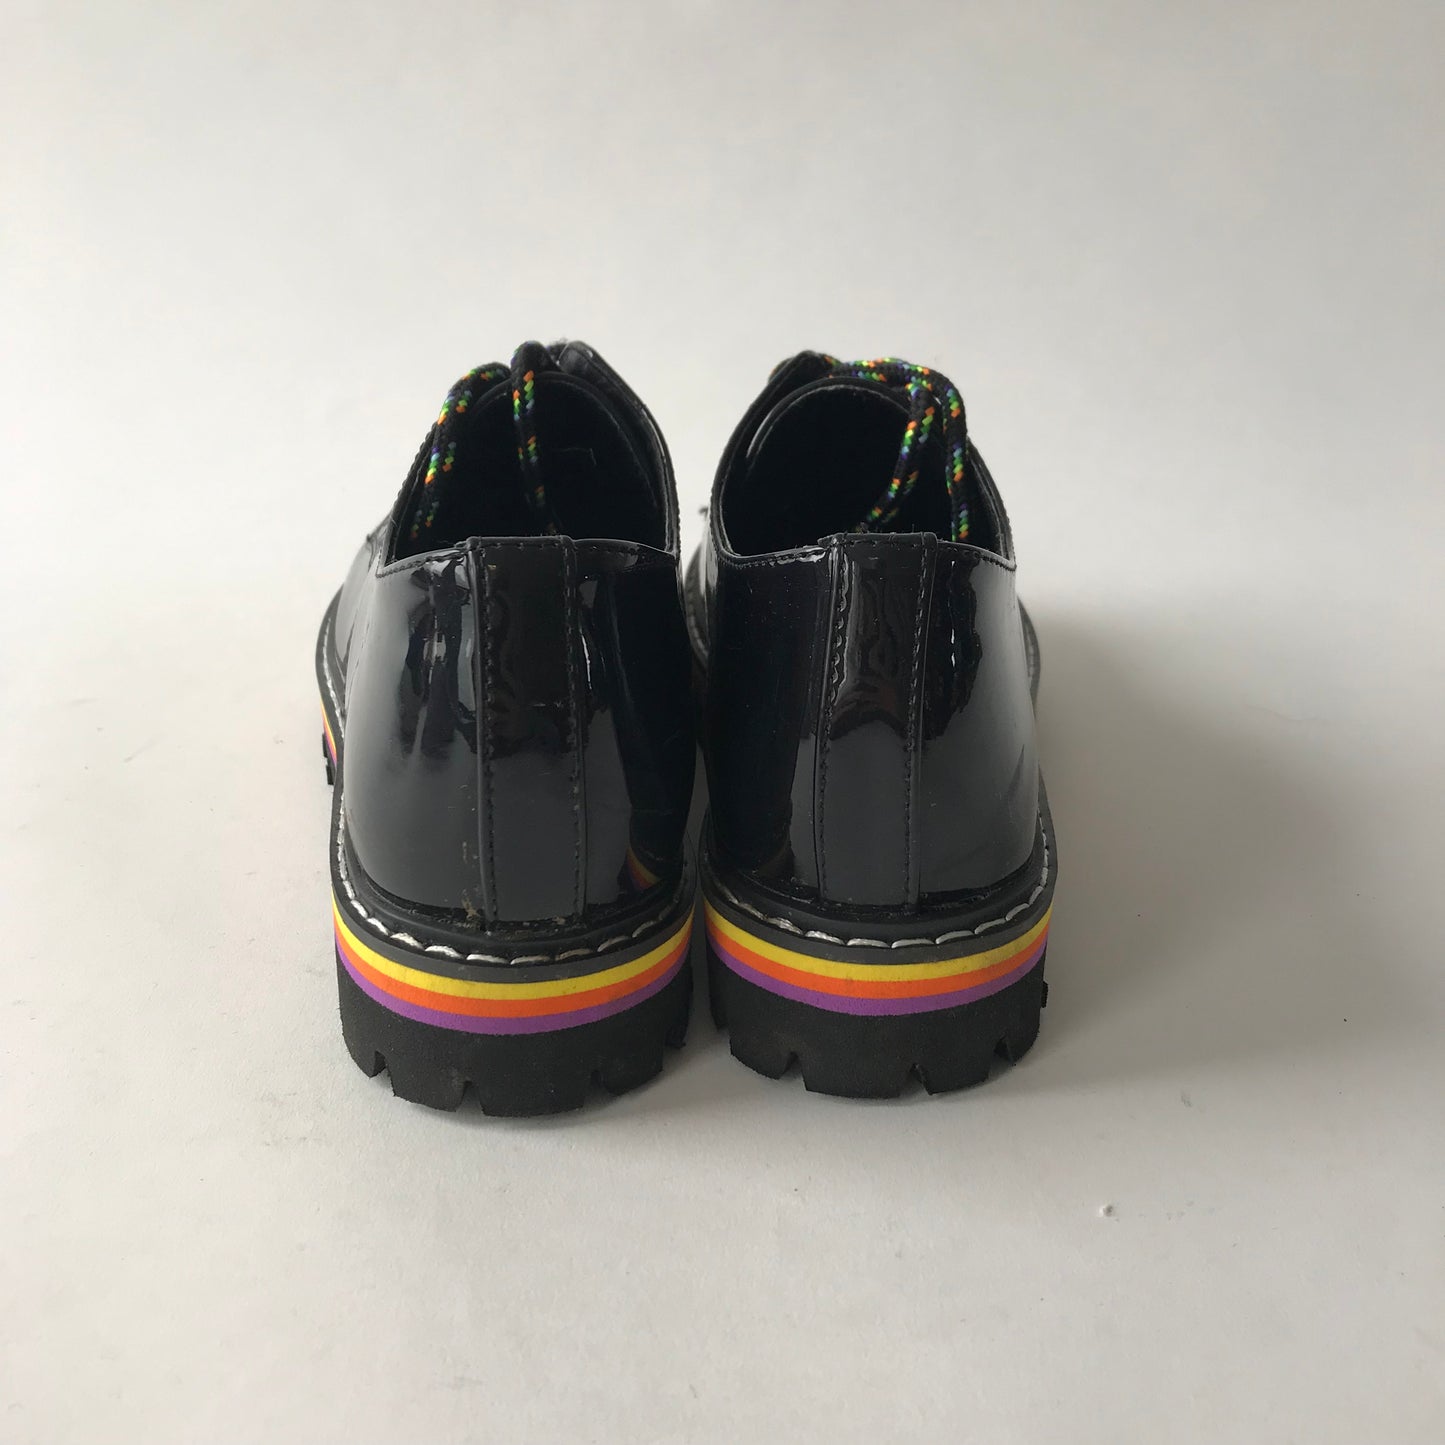 Tu Black Shoes with Colourful Soles Shoe Size 2